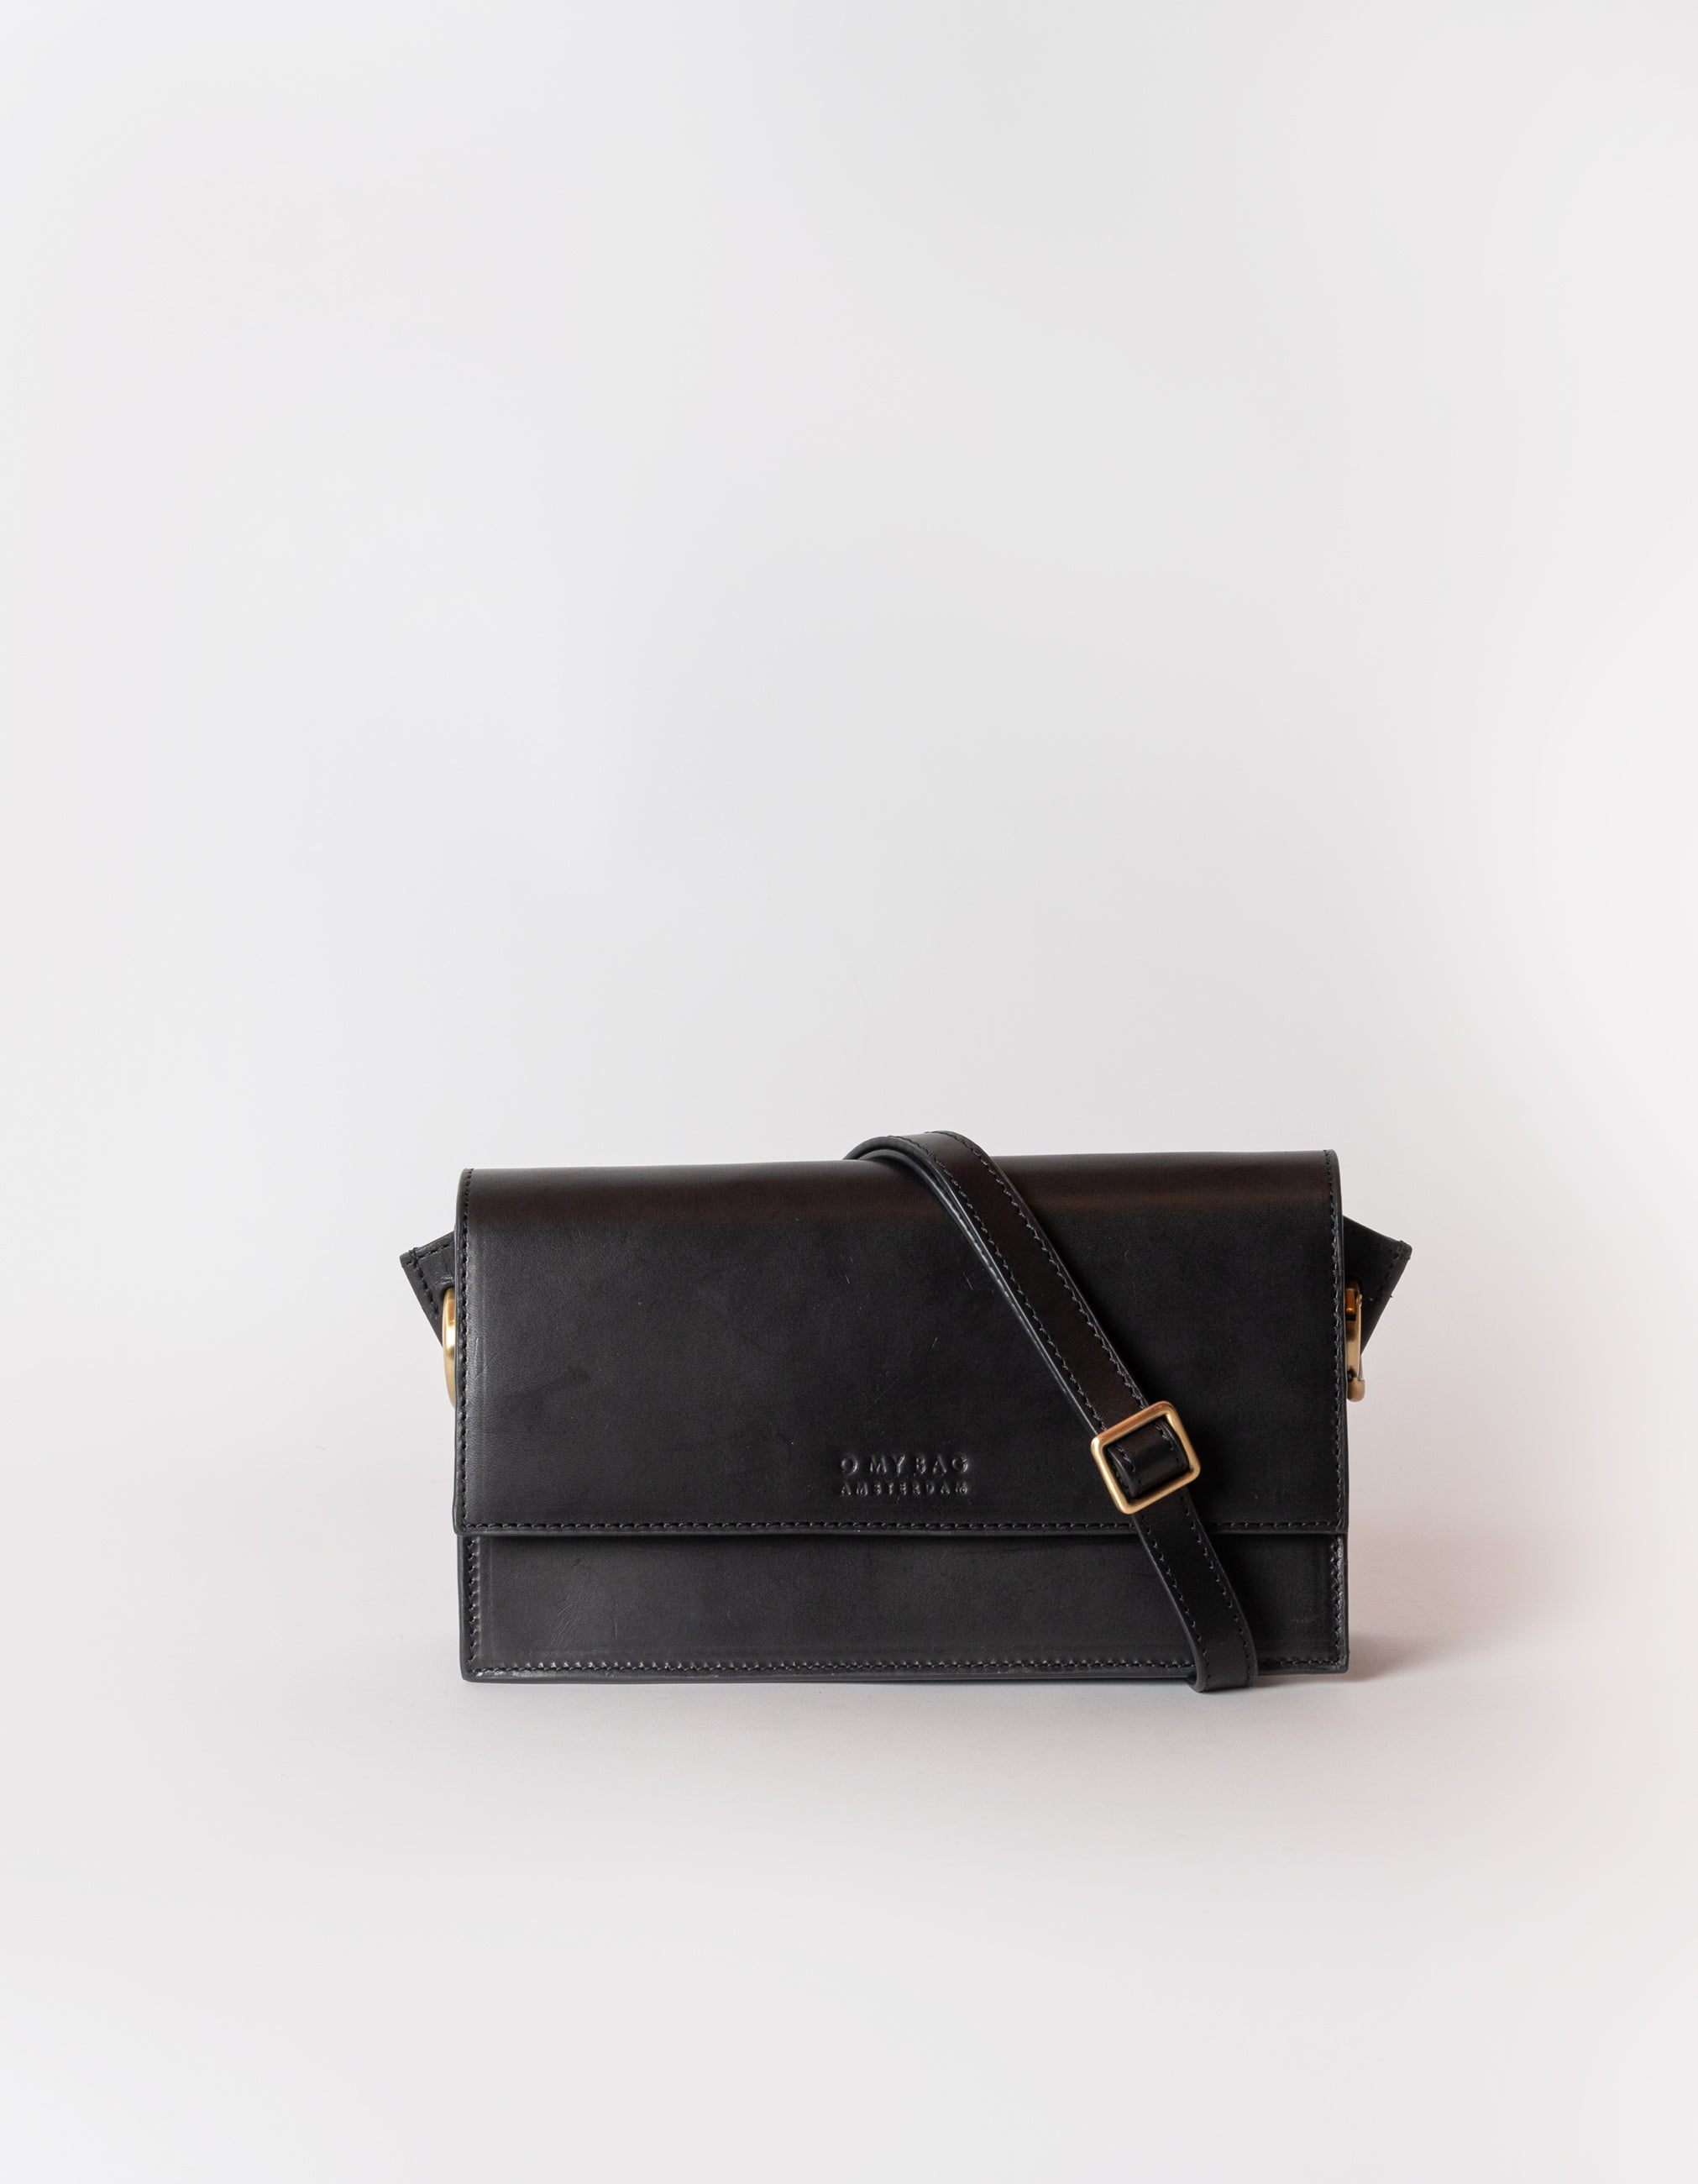 Stella McCartney Small Alter Leather Two-Tone Chain Shoulder Bag - Bergdorf  Goodman